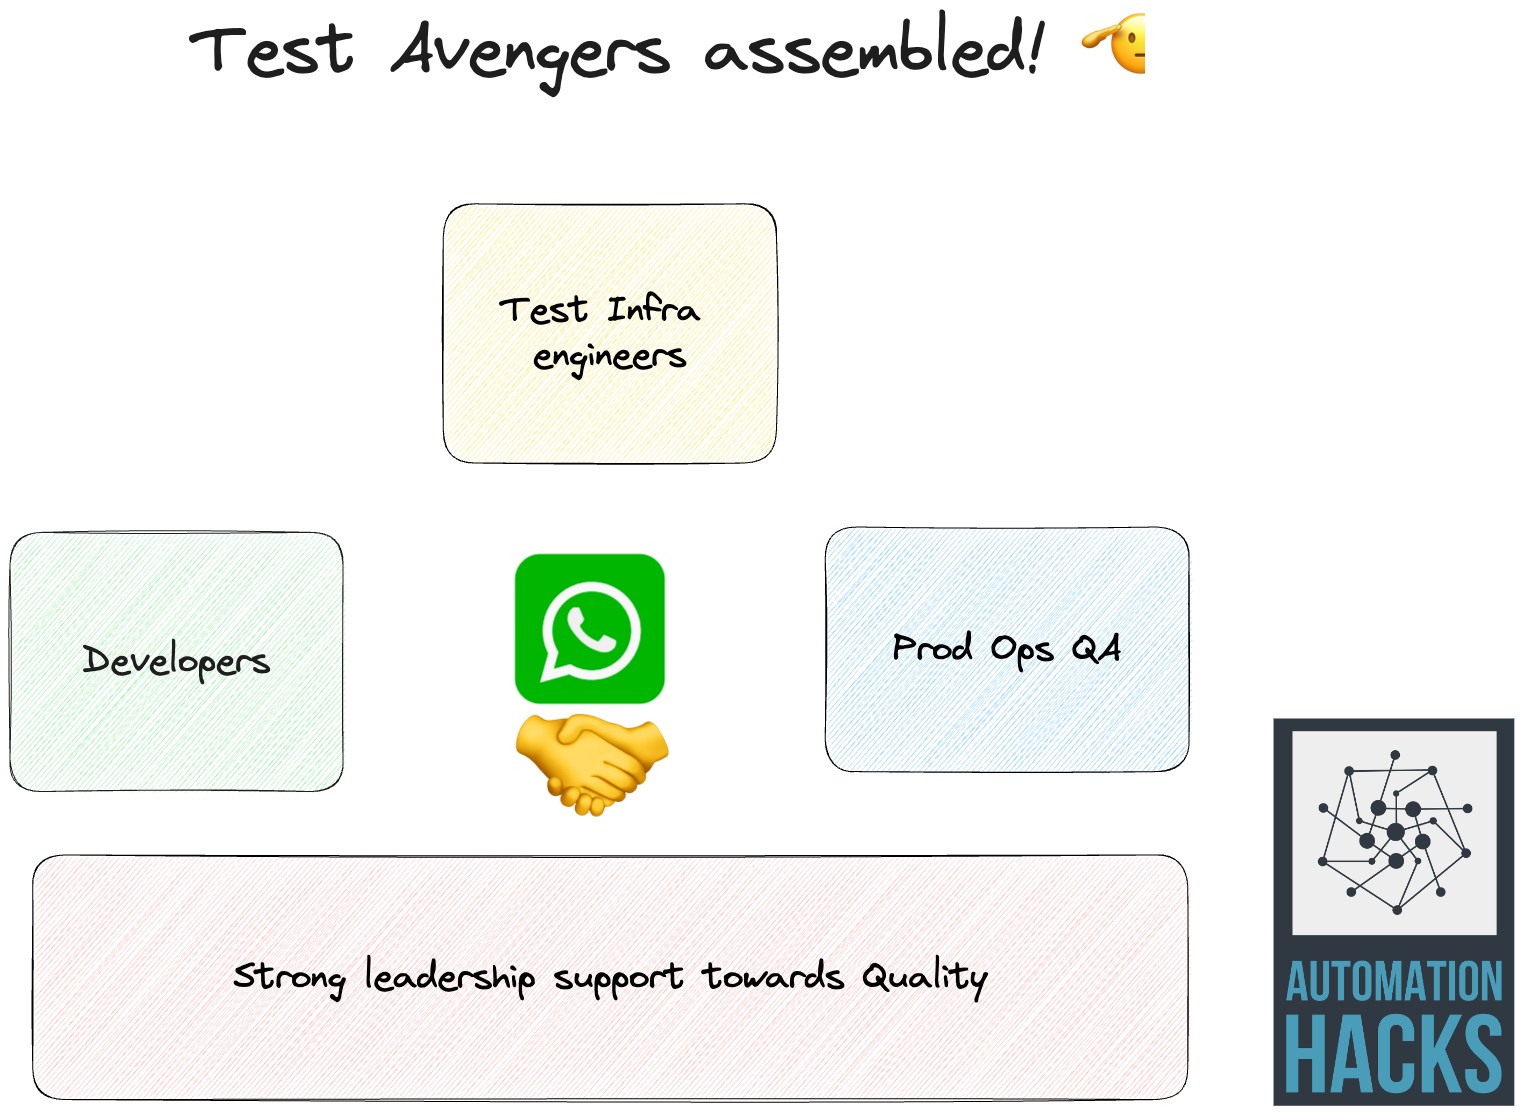 Test avengers assembled